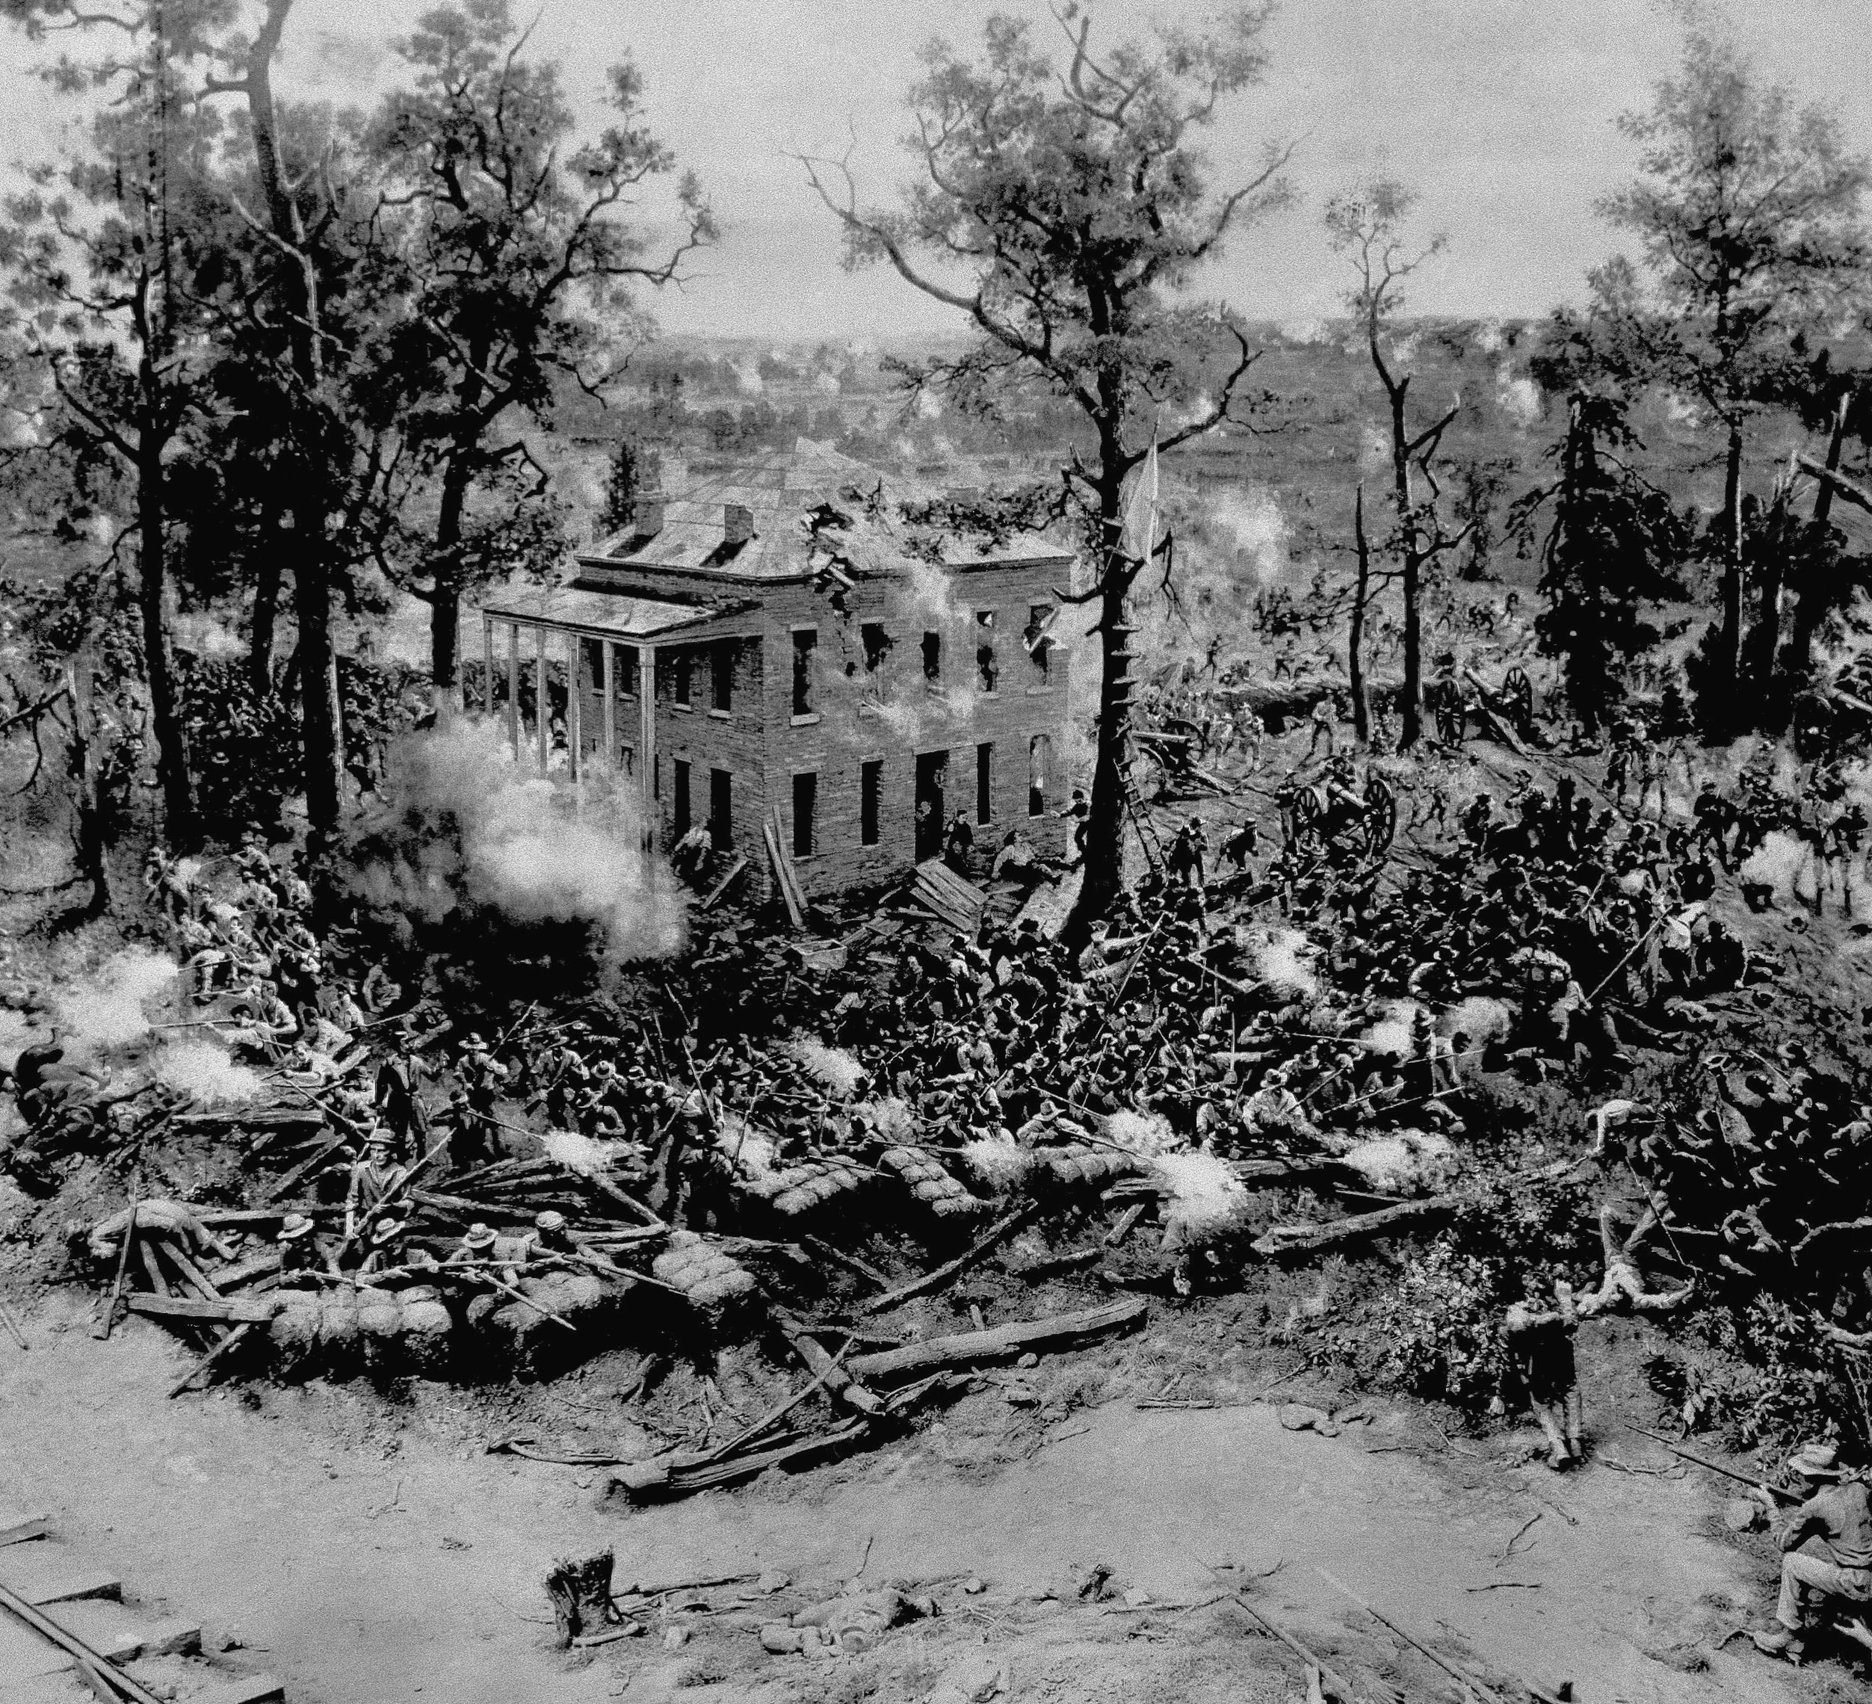 The burning of Atlanta, seared into America's memory | Pittsburgh Post 